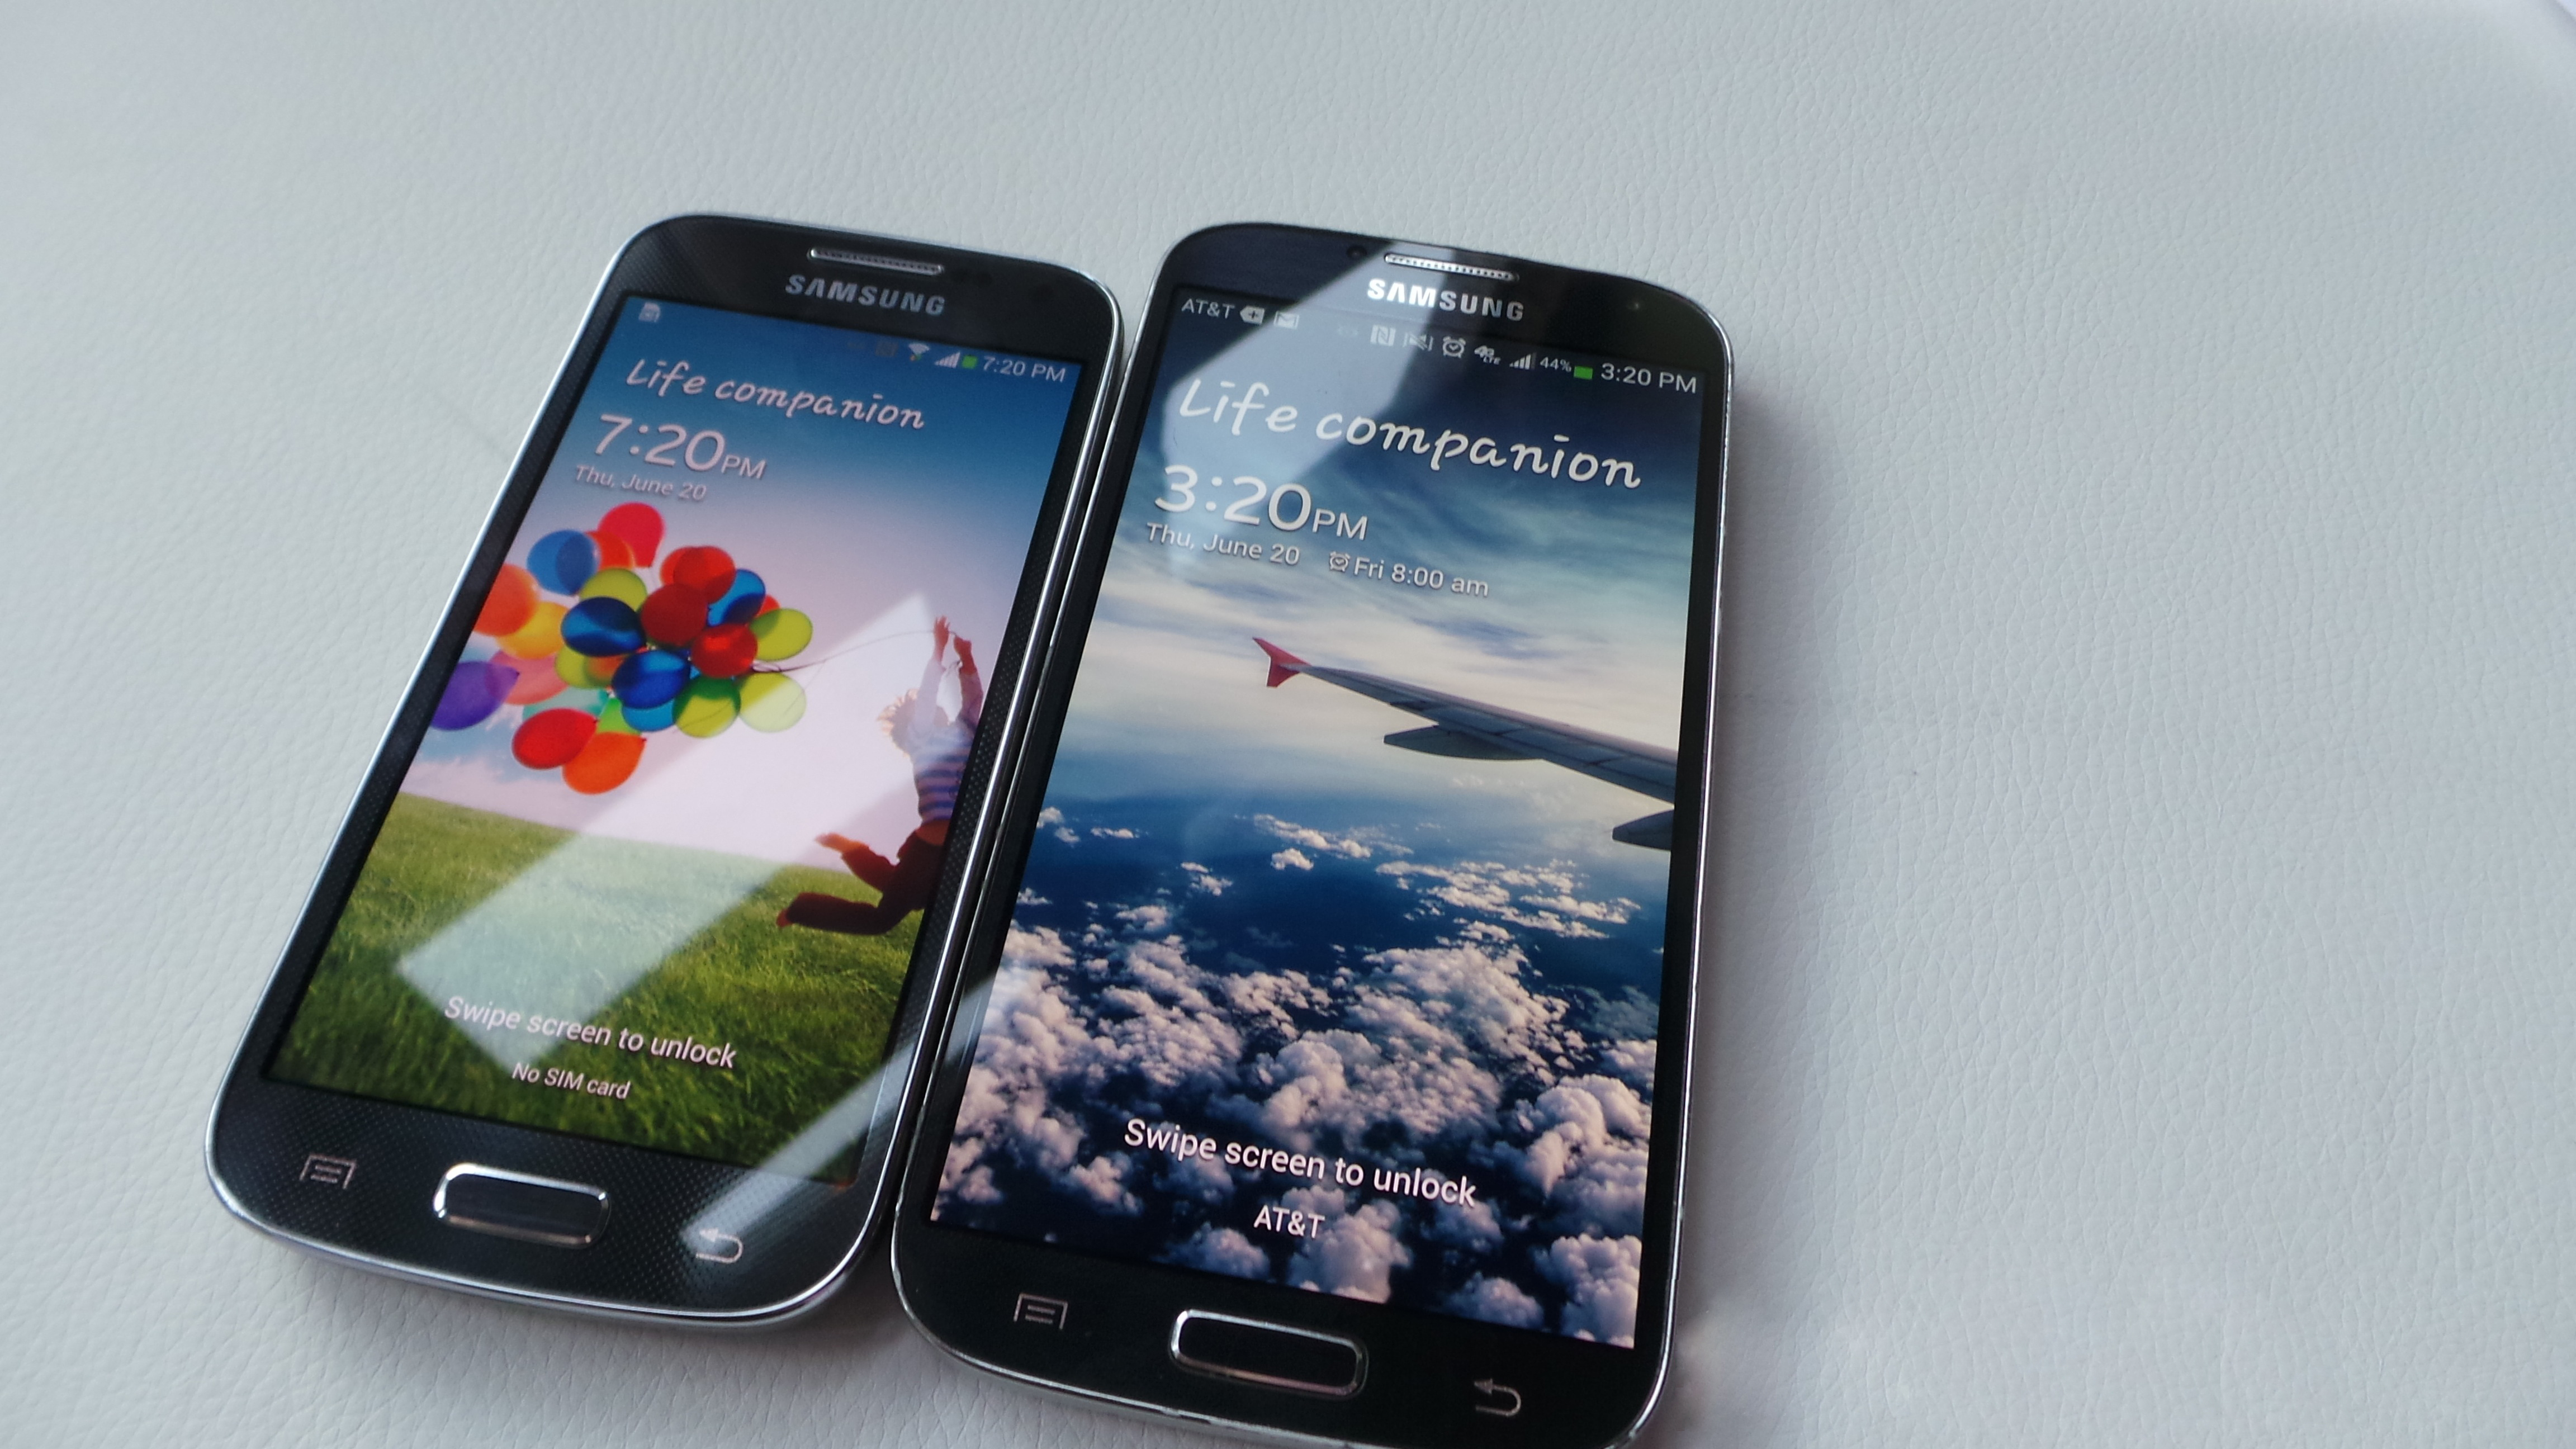 Работы телефон samsung. Samsung Galaxy s4 Mini. Самсунг галакси с4. Samsung Galaxy 4 Mini. S4 Mini Samsung narhi.